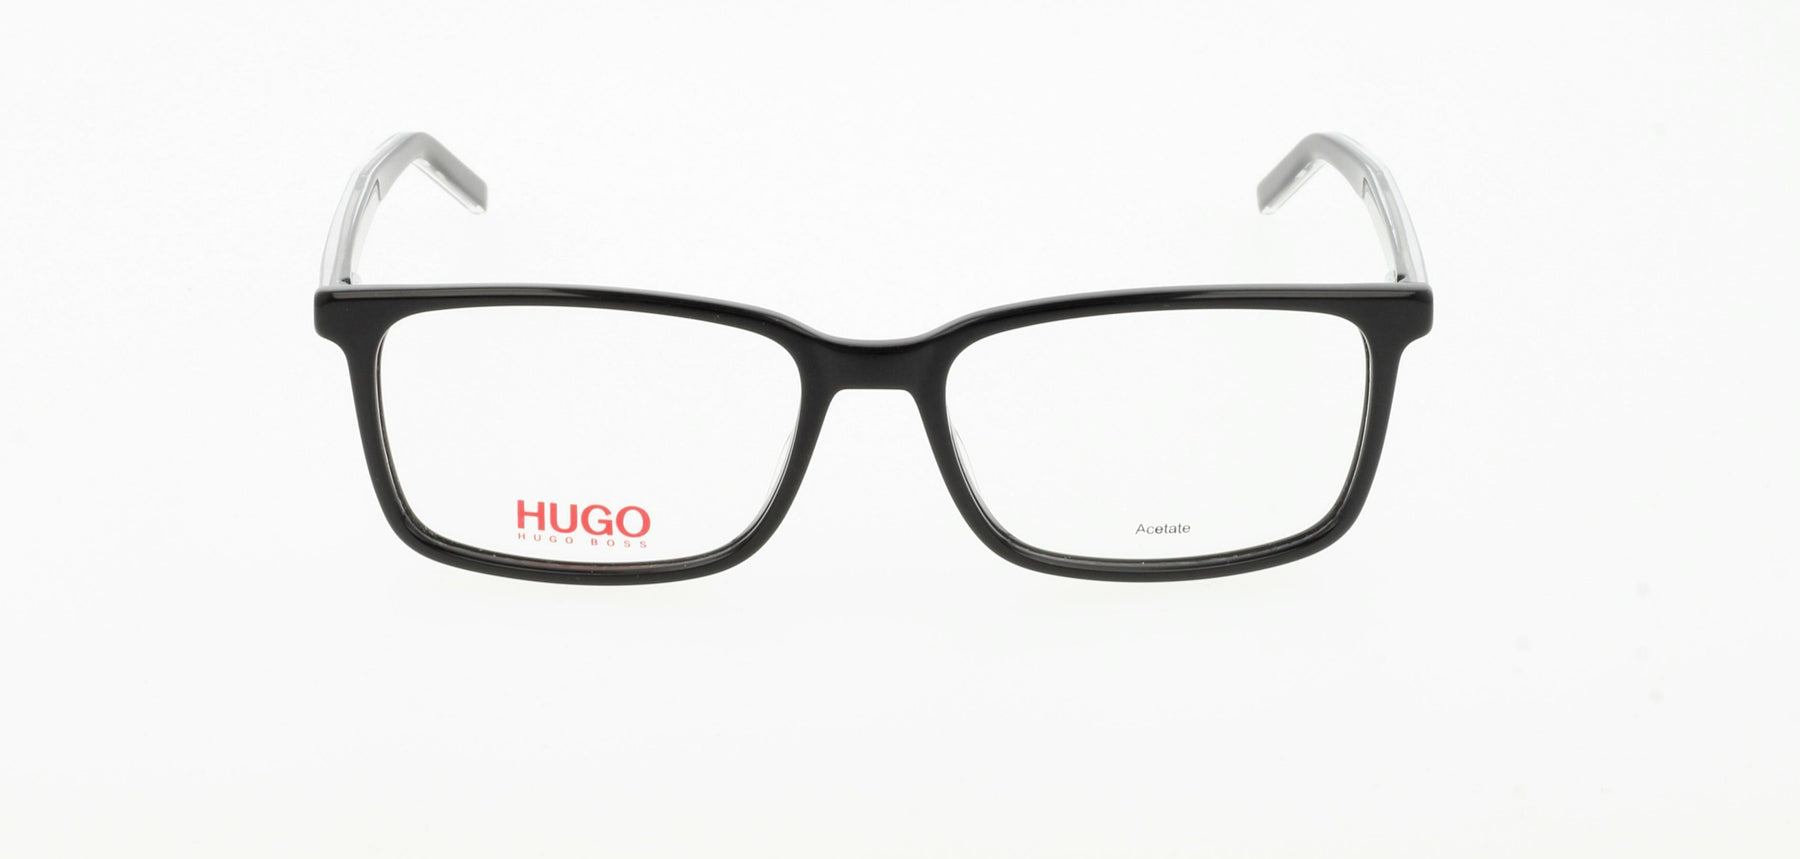 Vista-1 - Gafas oftálmicas Hugo HG 1029 Hombre Color Negro